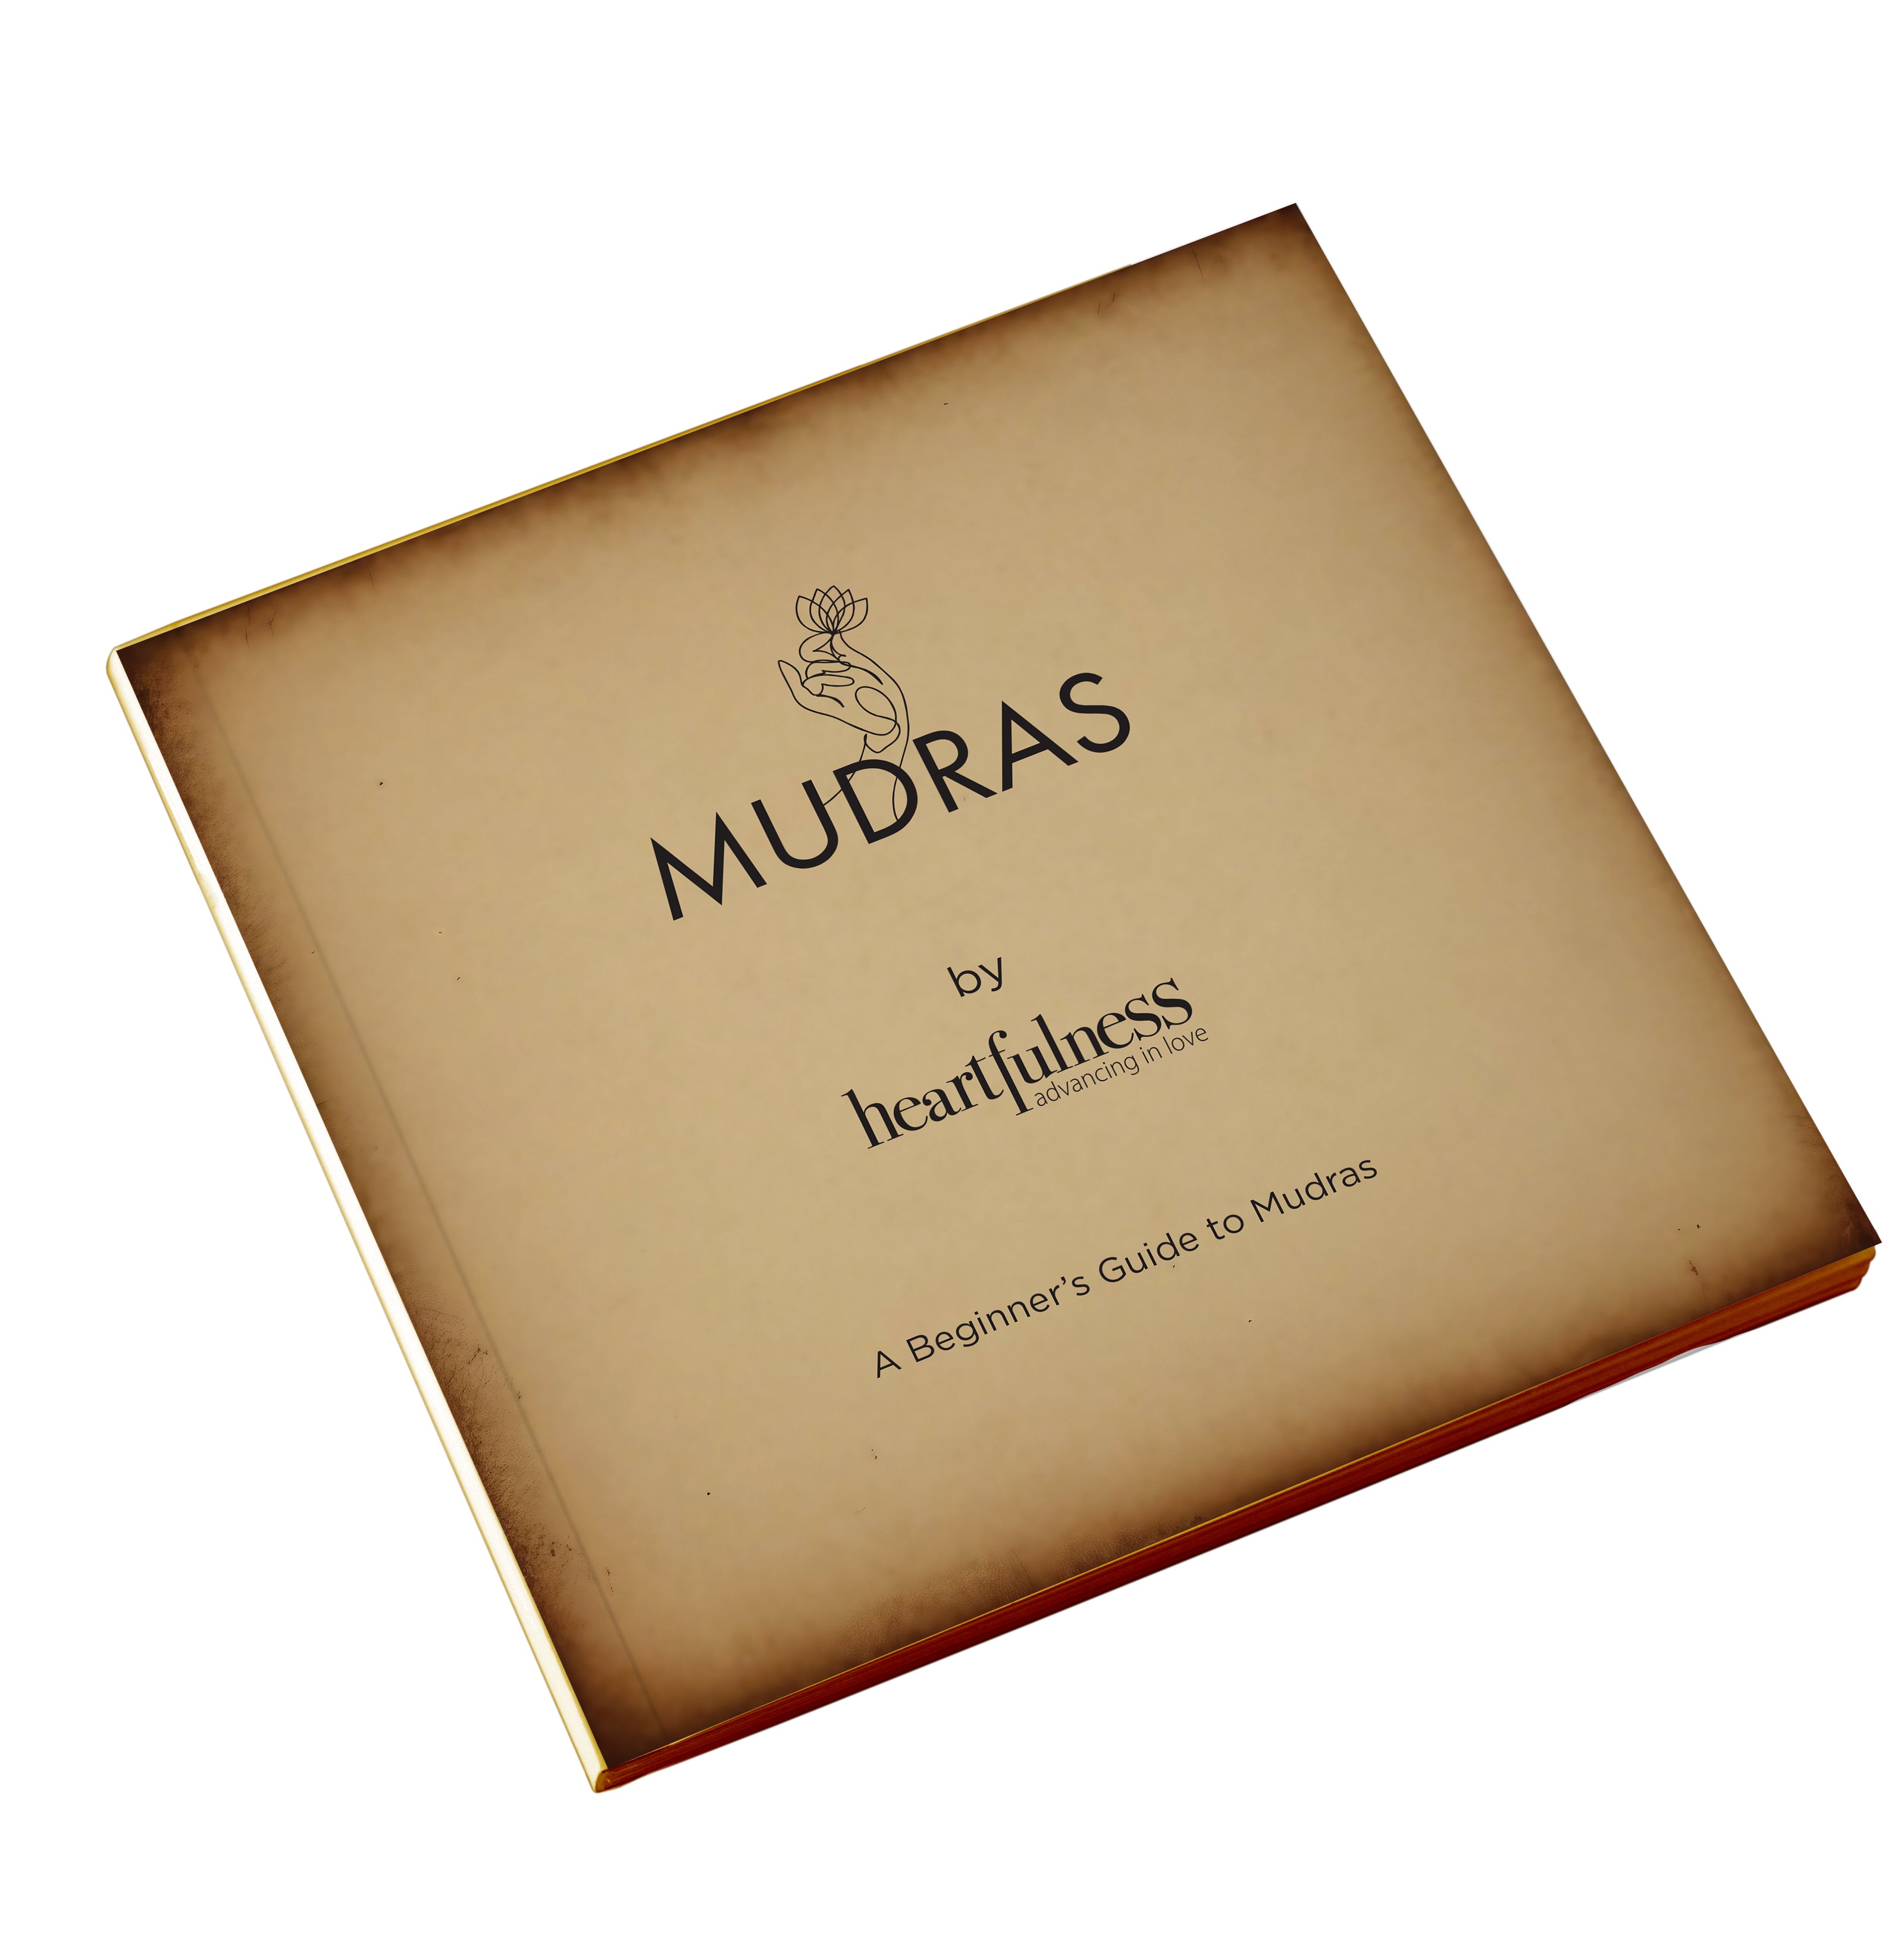 Mudras by Heartfulness